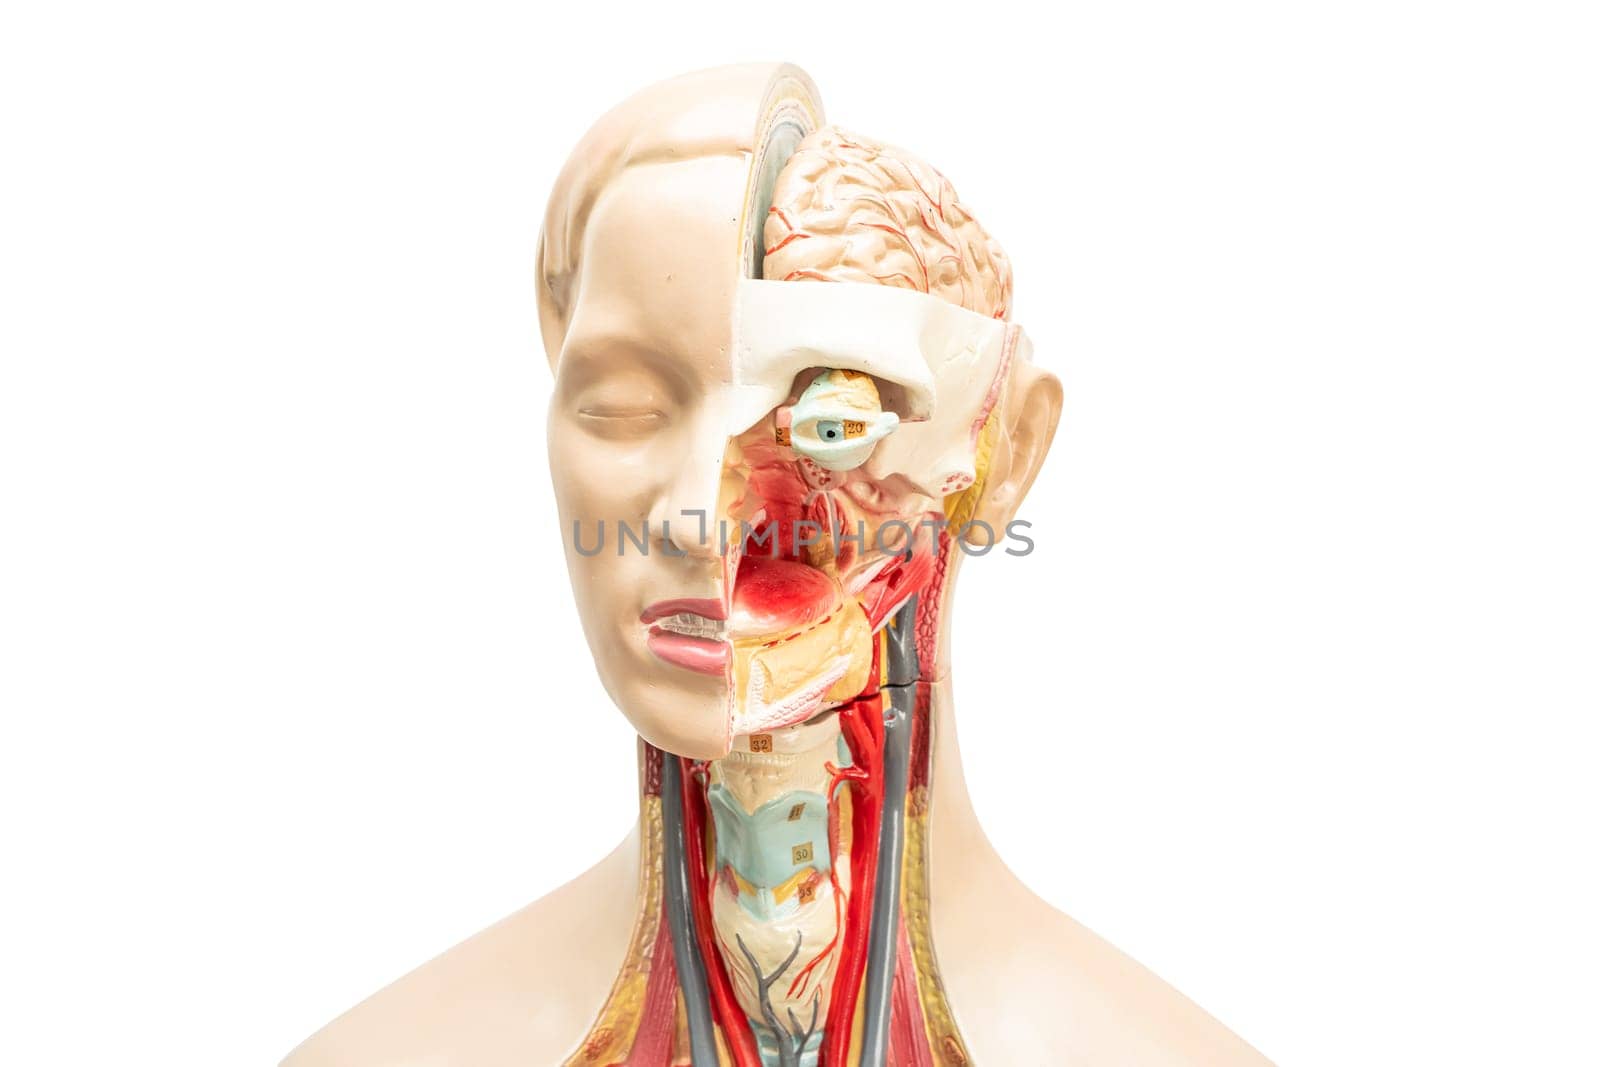 Human brain model of head anatomy for medical training course, teaching medicine education.